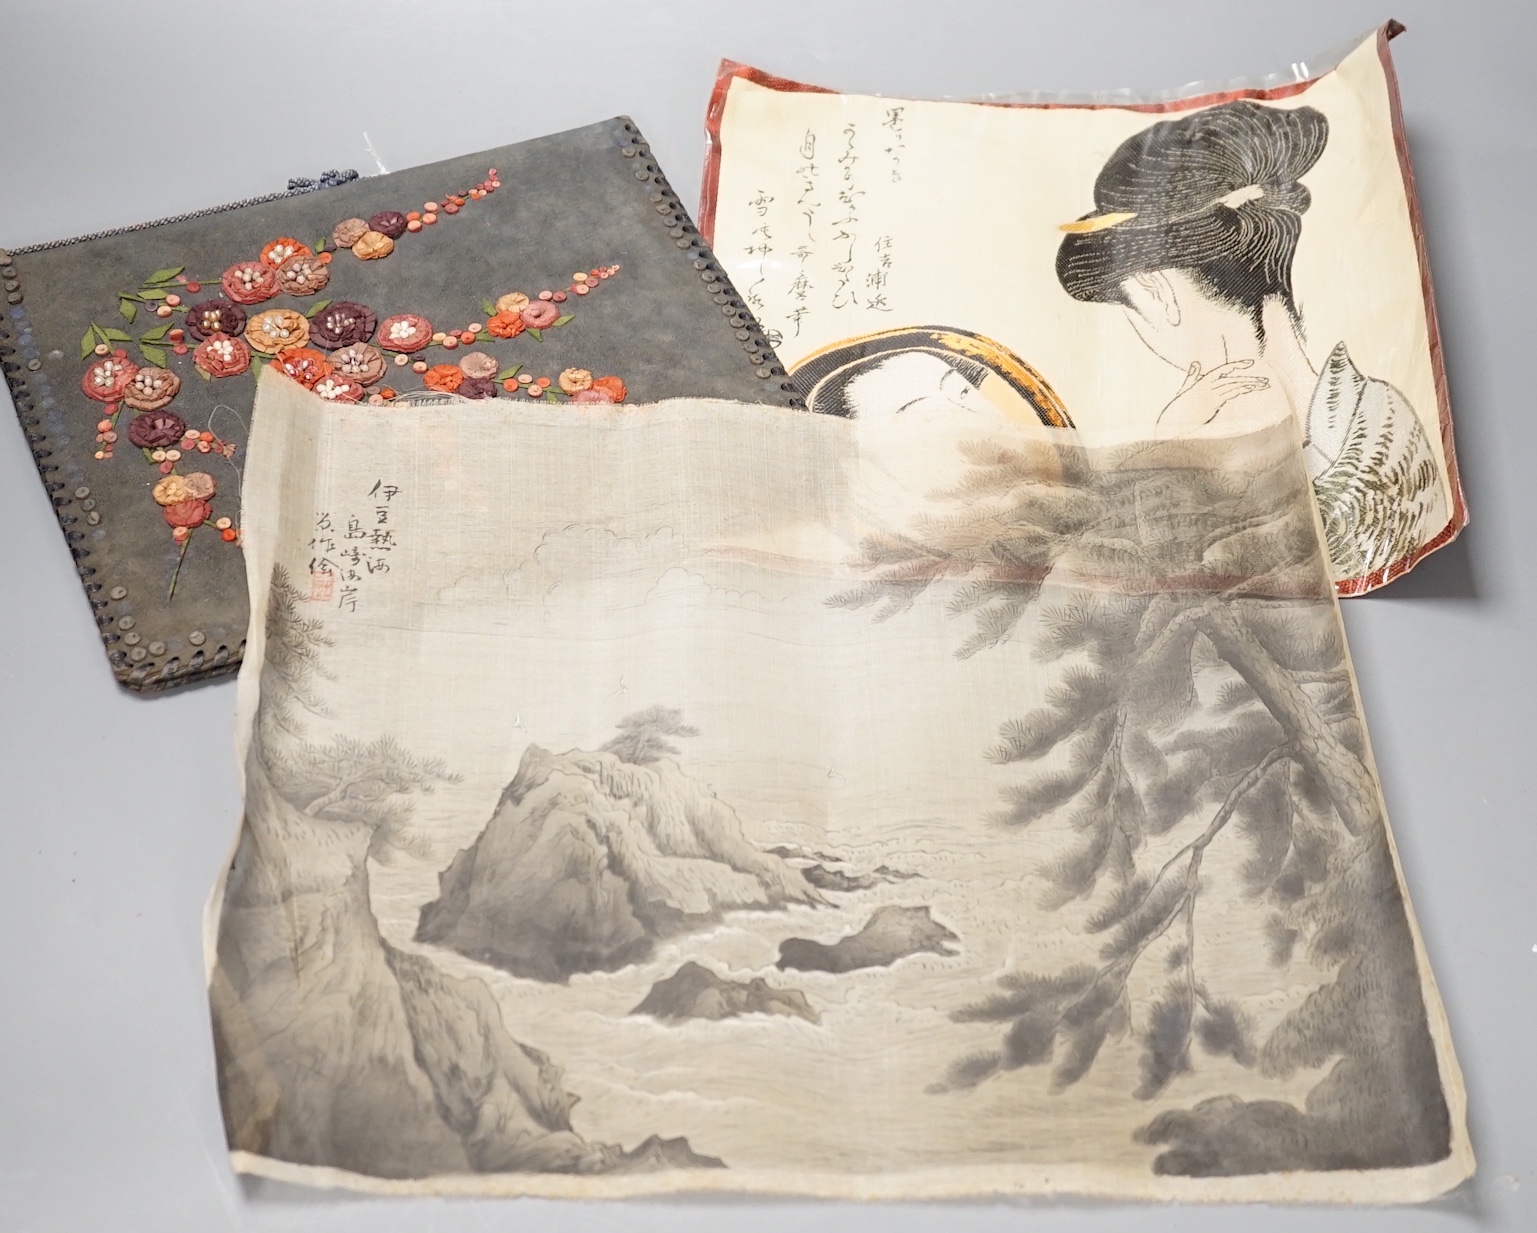 Two Japanese watercolours, a Kotozuka Eiichi woodblock print, a Japanese brocade panel and a book cover